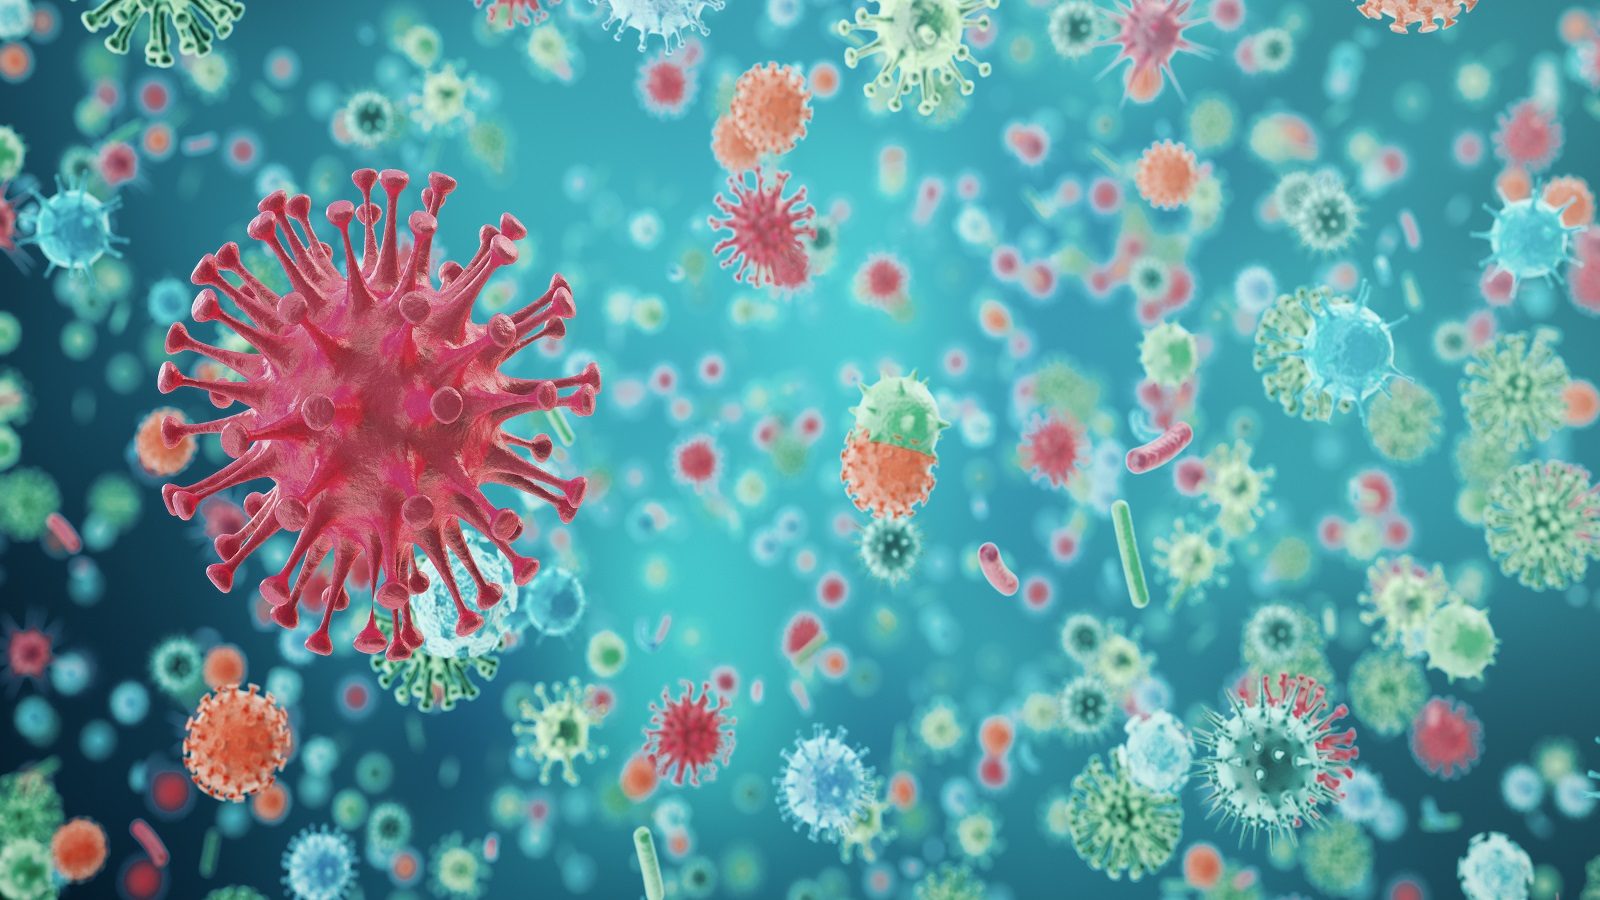 Coronavirus in Malaysia: COVID-19 outbreak, measures and impact